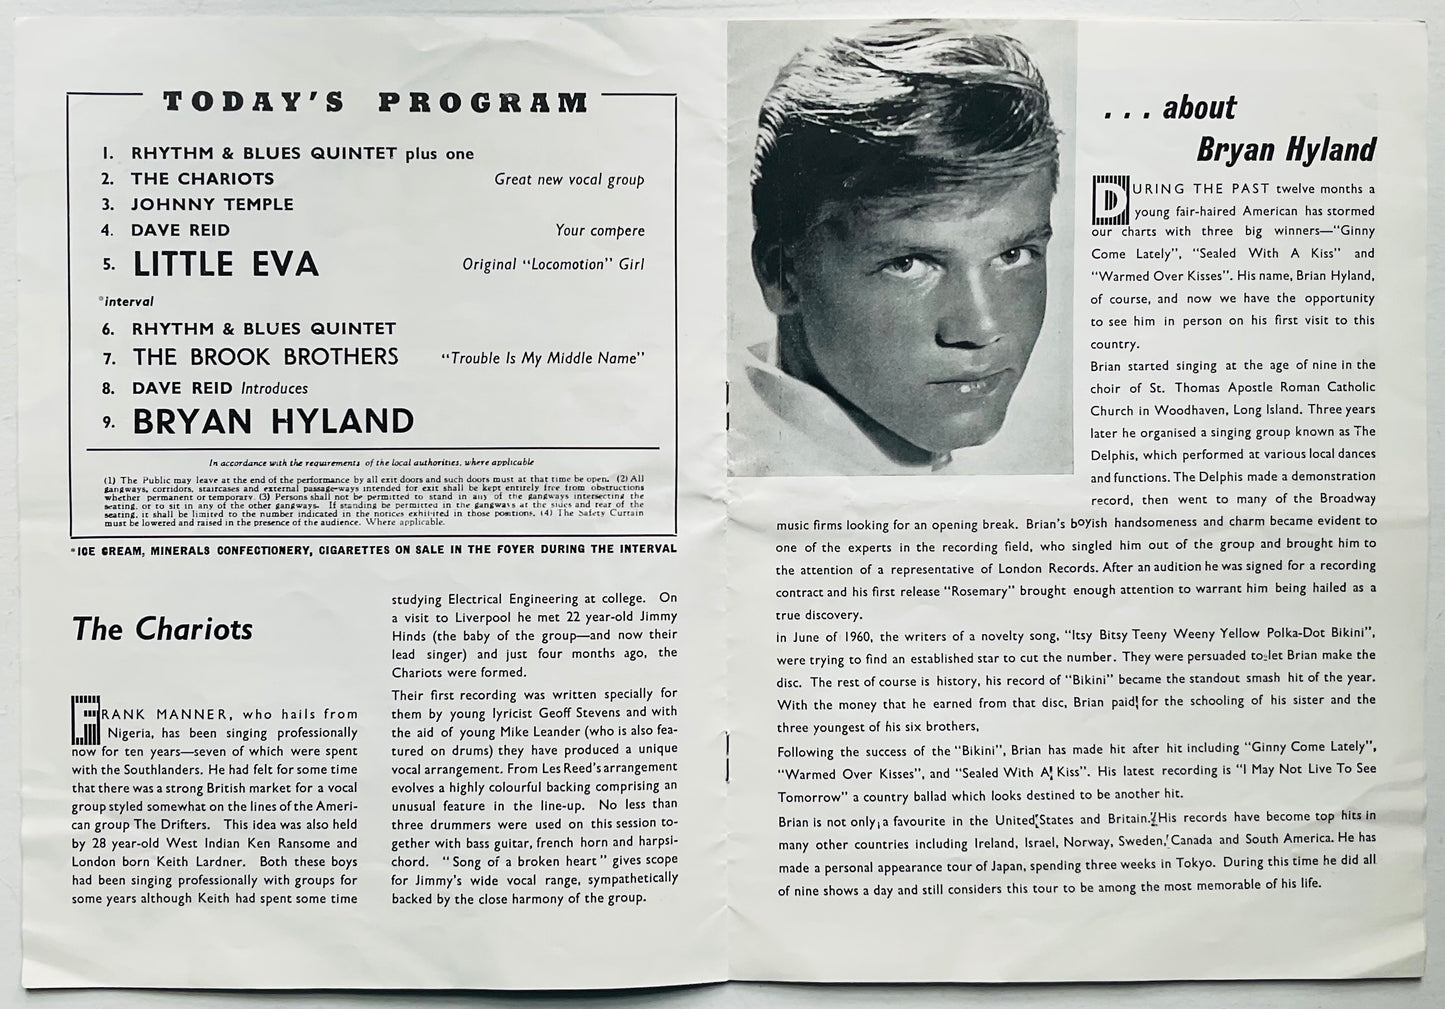 Little Eva Brian Hyland Original Concert Tour Gig Programme UK Tour 1963